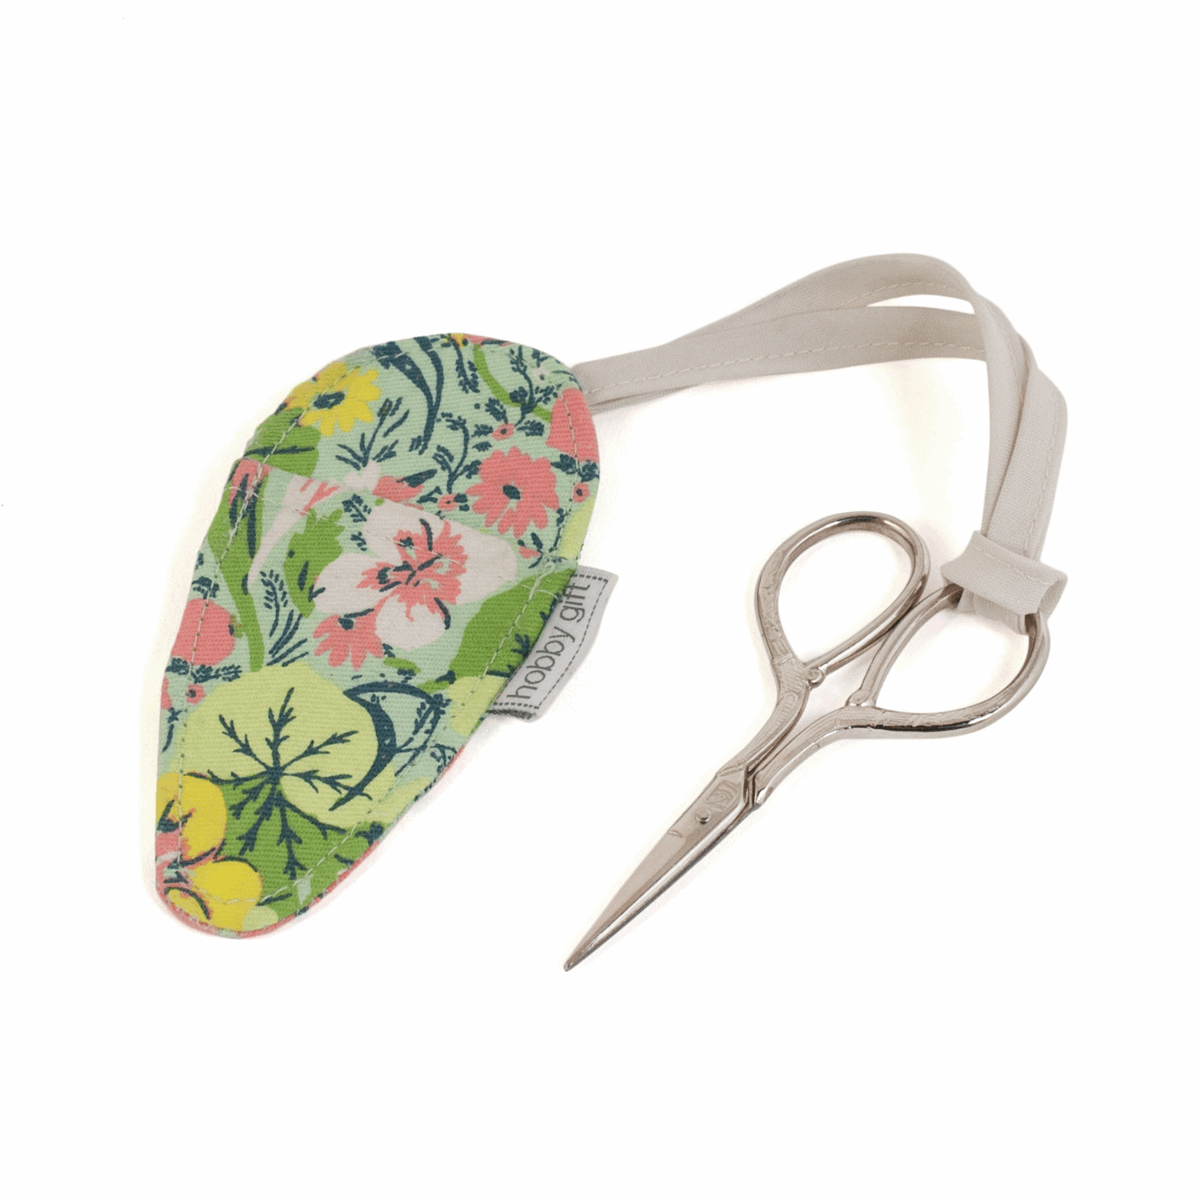 Spring Floral Scissors in Case